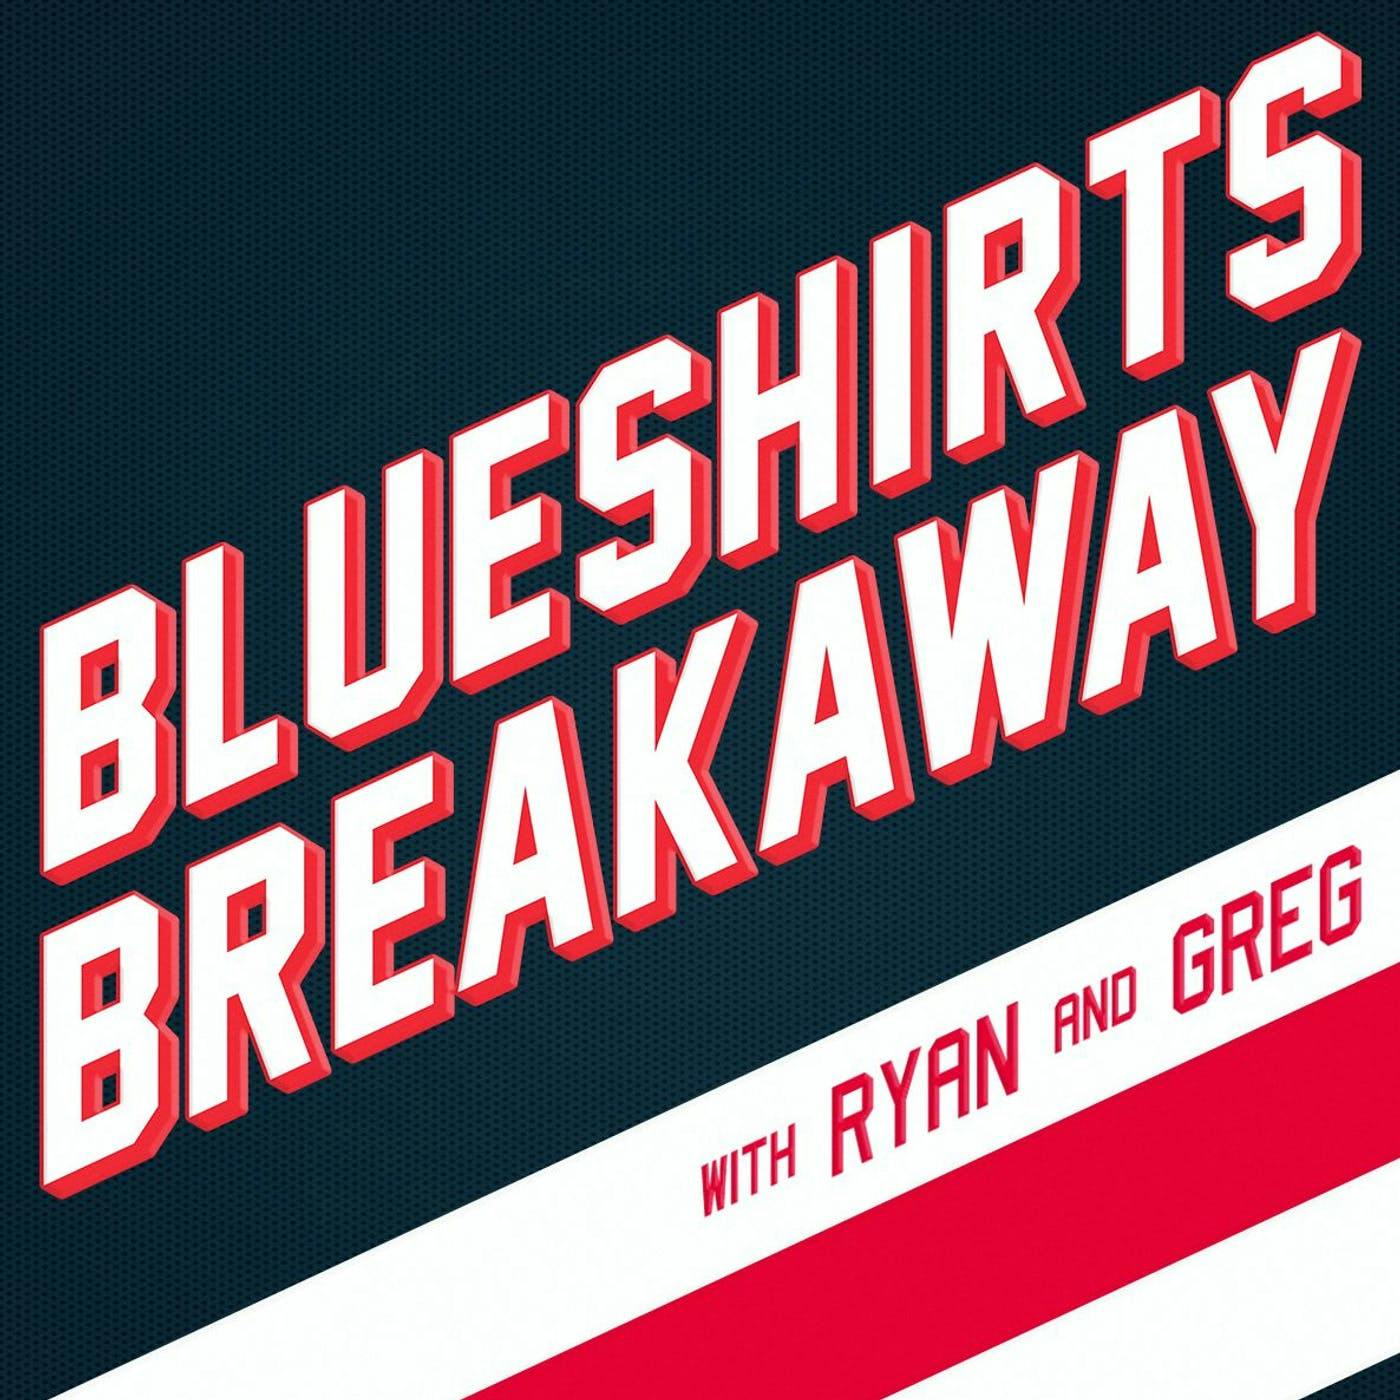 Blueshirts Breakaway EP 144 - Lineup Predictions and Joe & Mike of Blueshirts Banter